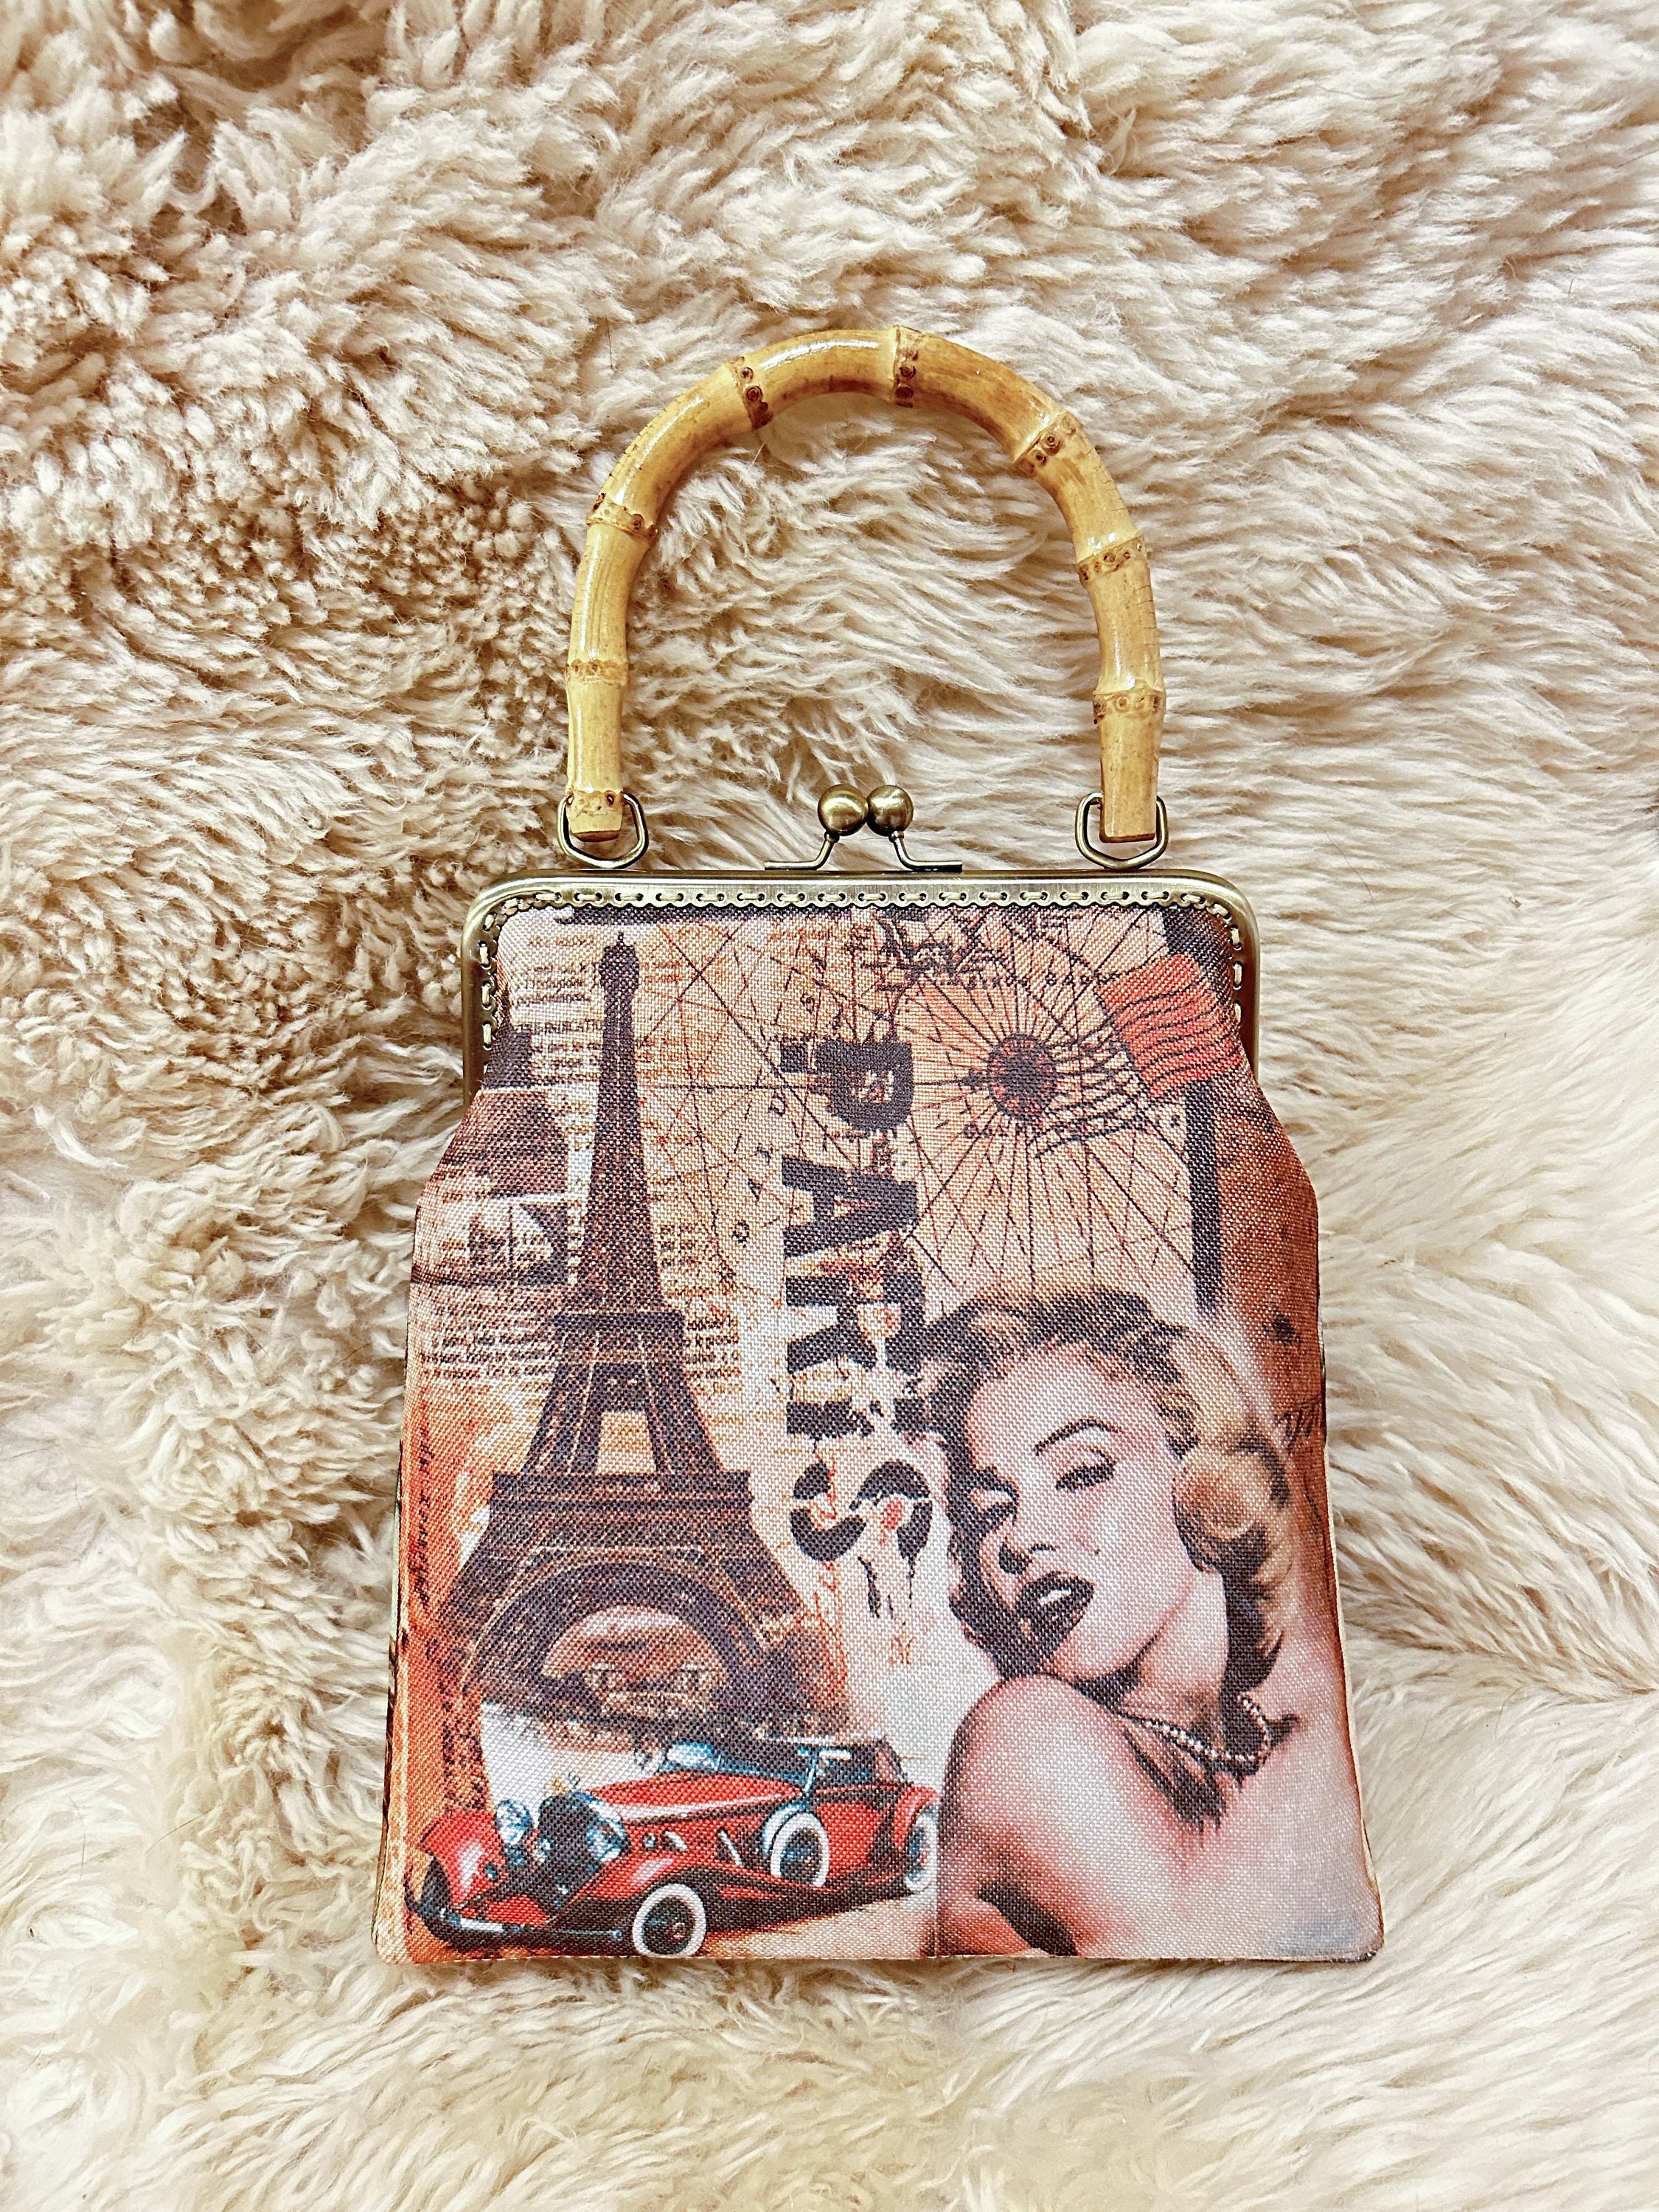 Kiss Lock Clutch Purse Vintage Fabric Frame Purse Marilyn Monroe Paris Eiffel Tower Bamboo Handle Bag Women's Fashion Handbag Party Evening